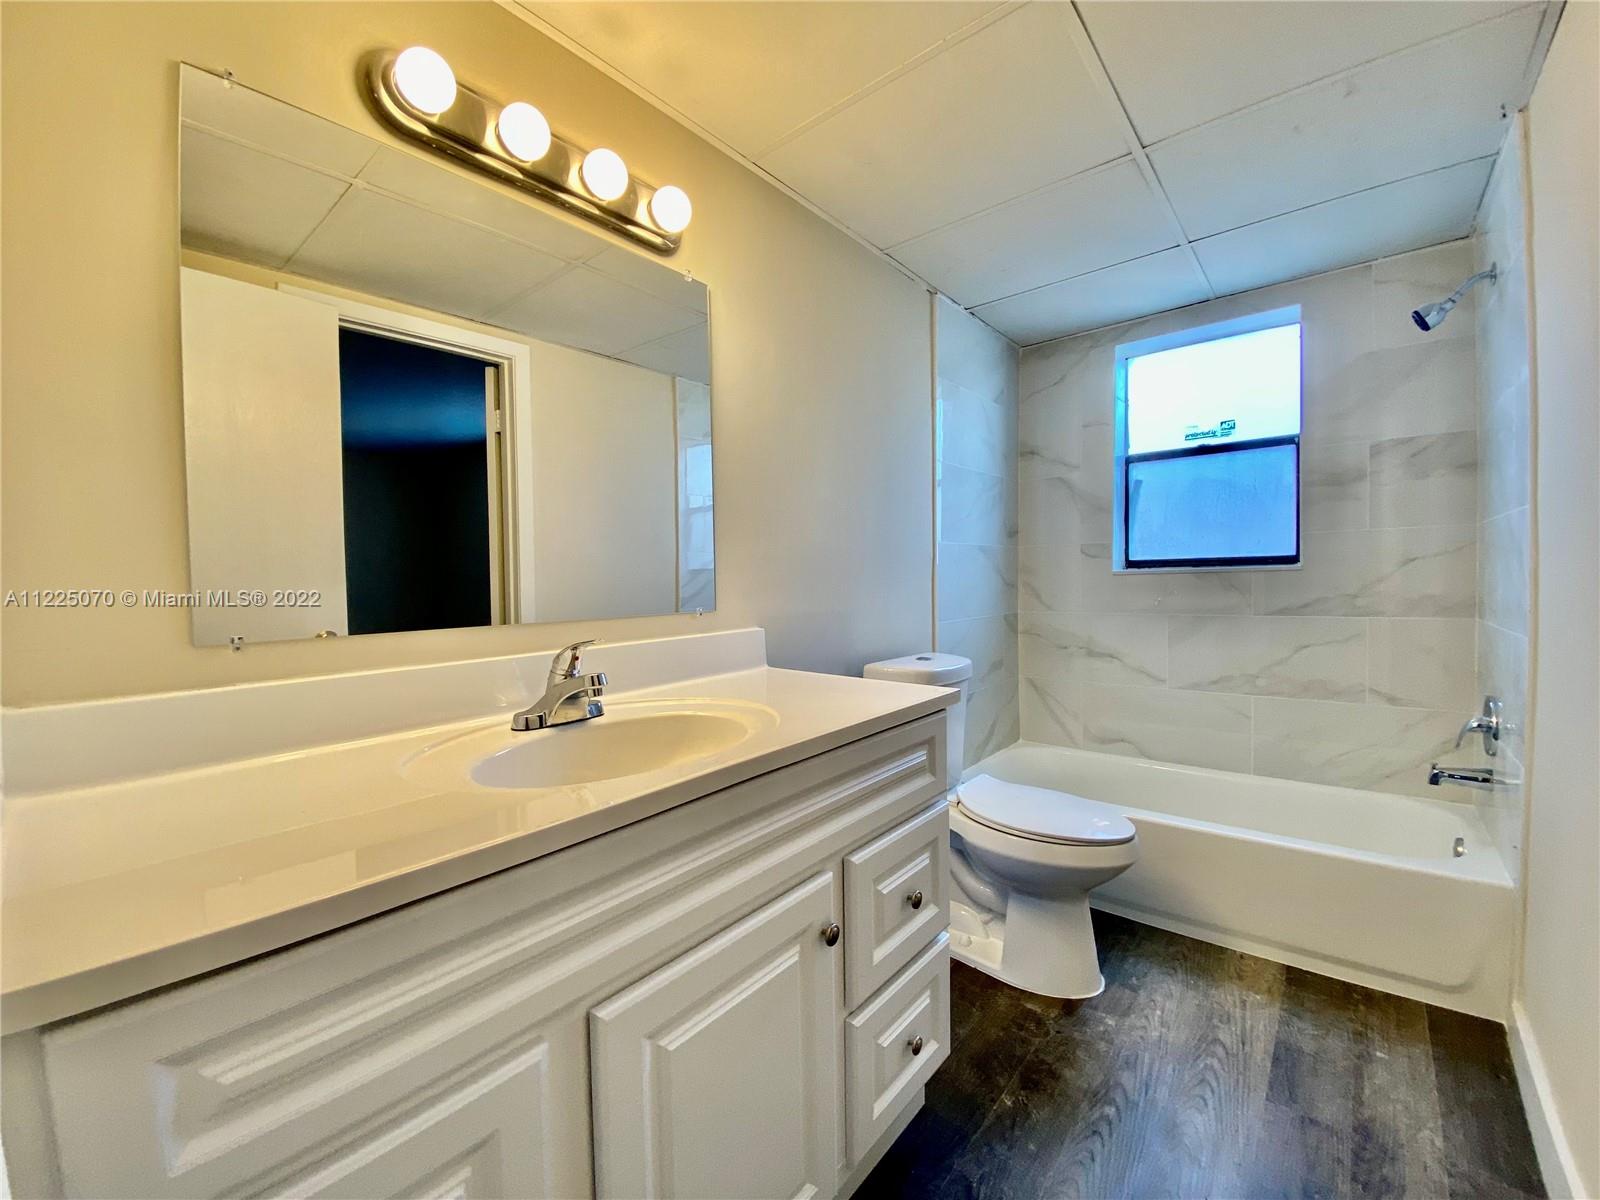 a bathroom with a sink a toilet and bathtub